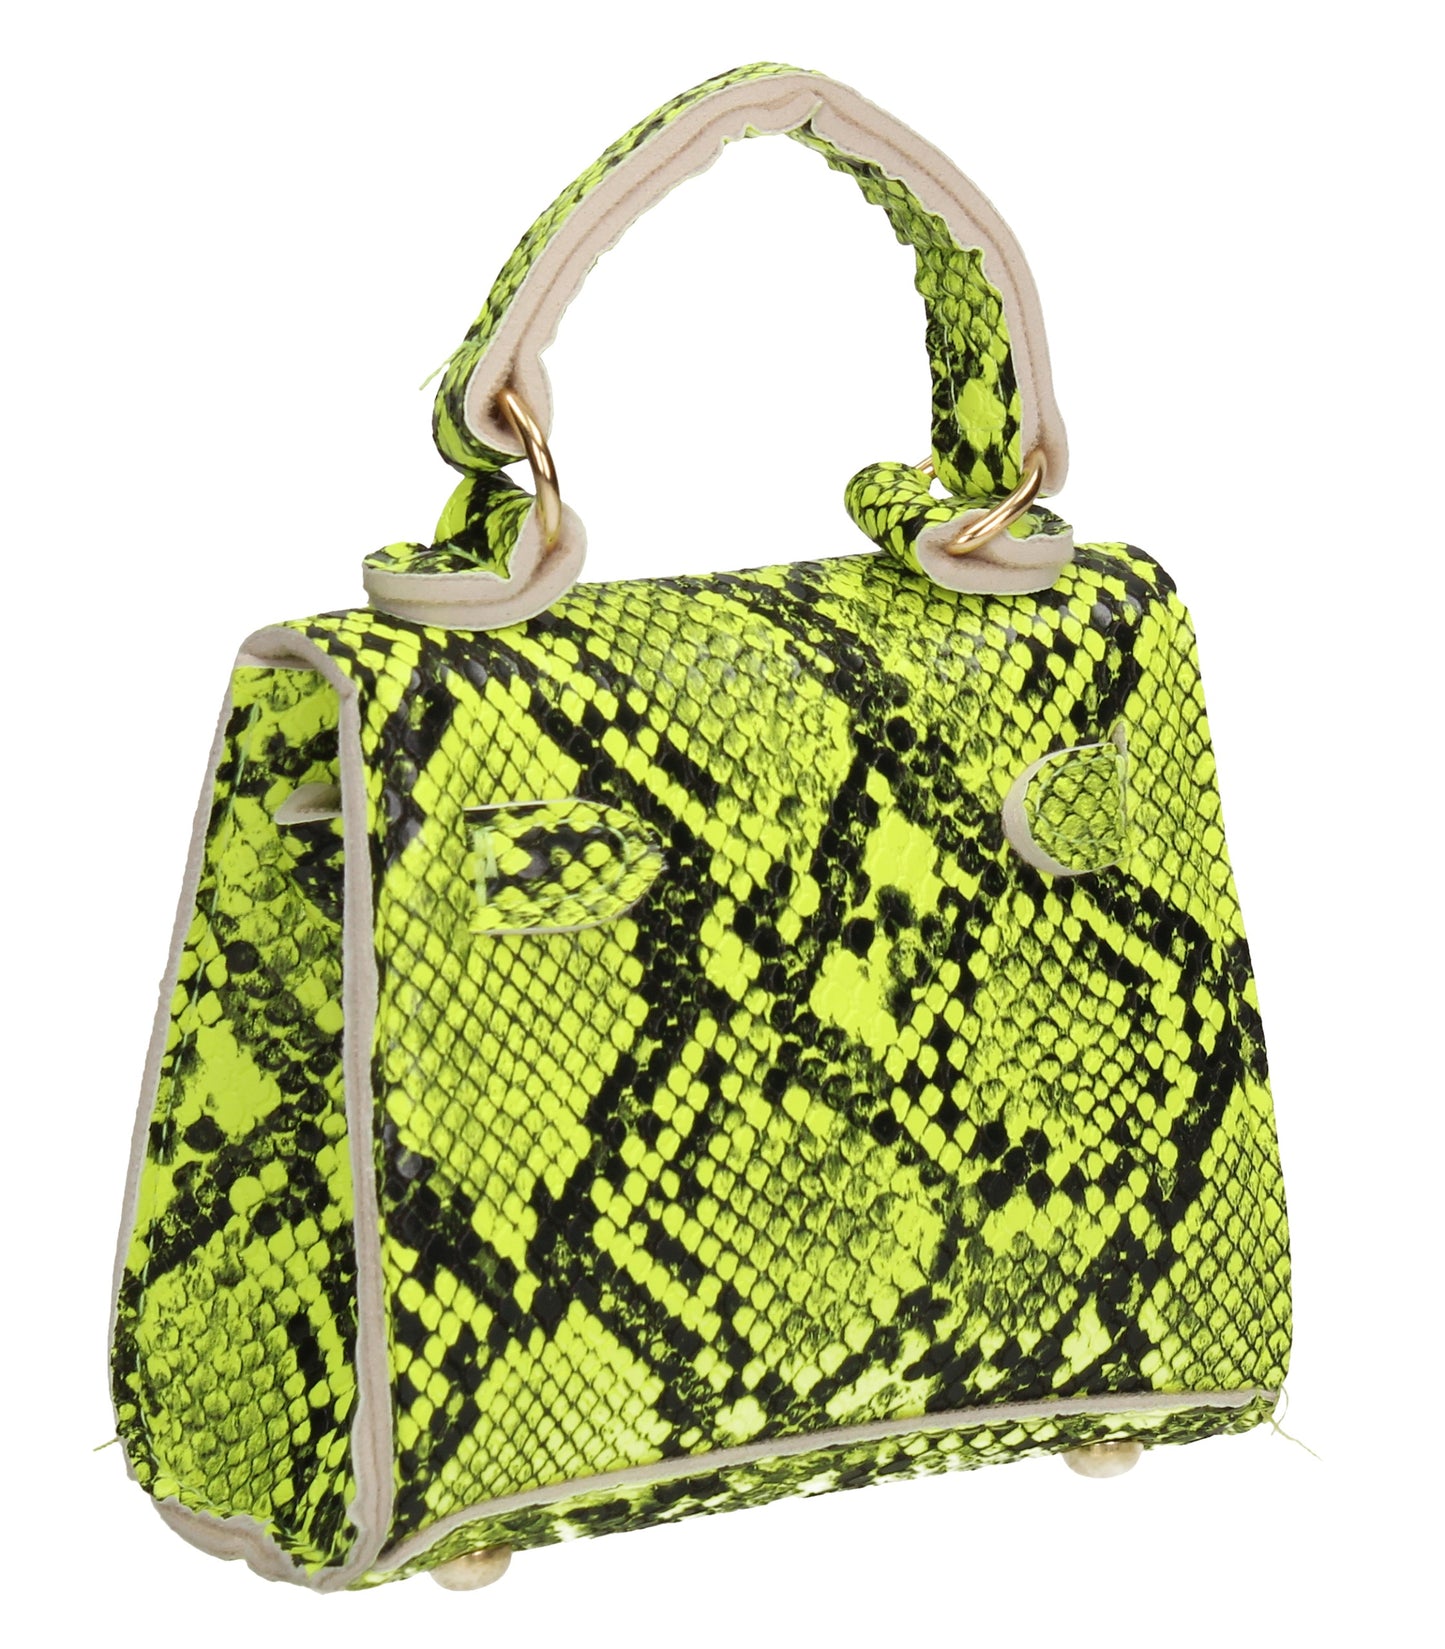 Layla Faux Snakeskin Leather Mini Grab Crossbody Clutch Clutch Bag Lime Green